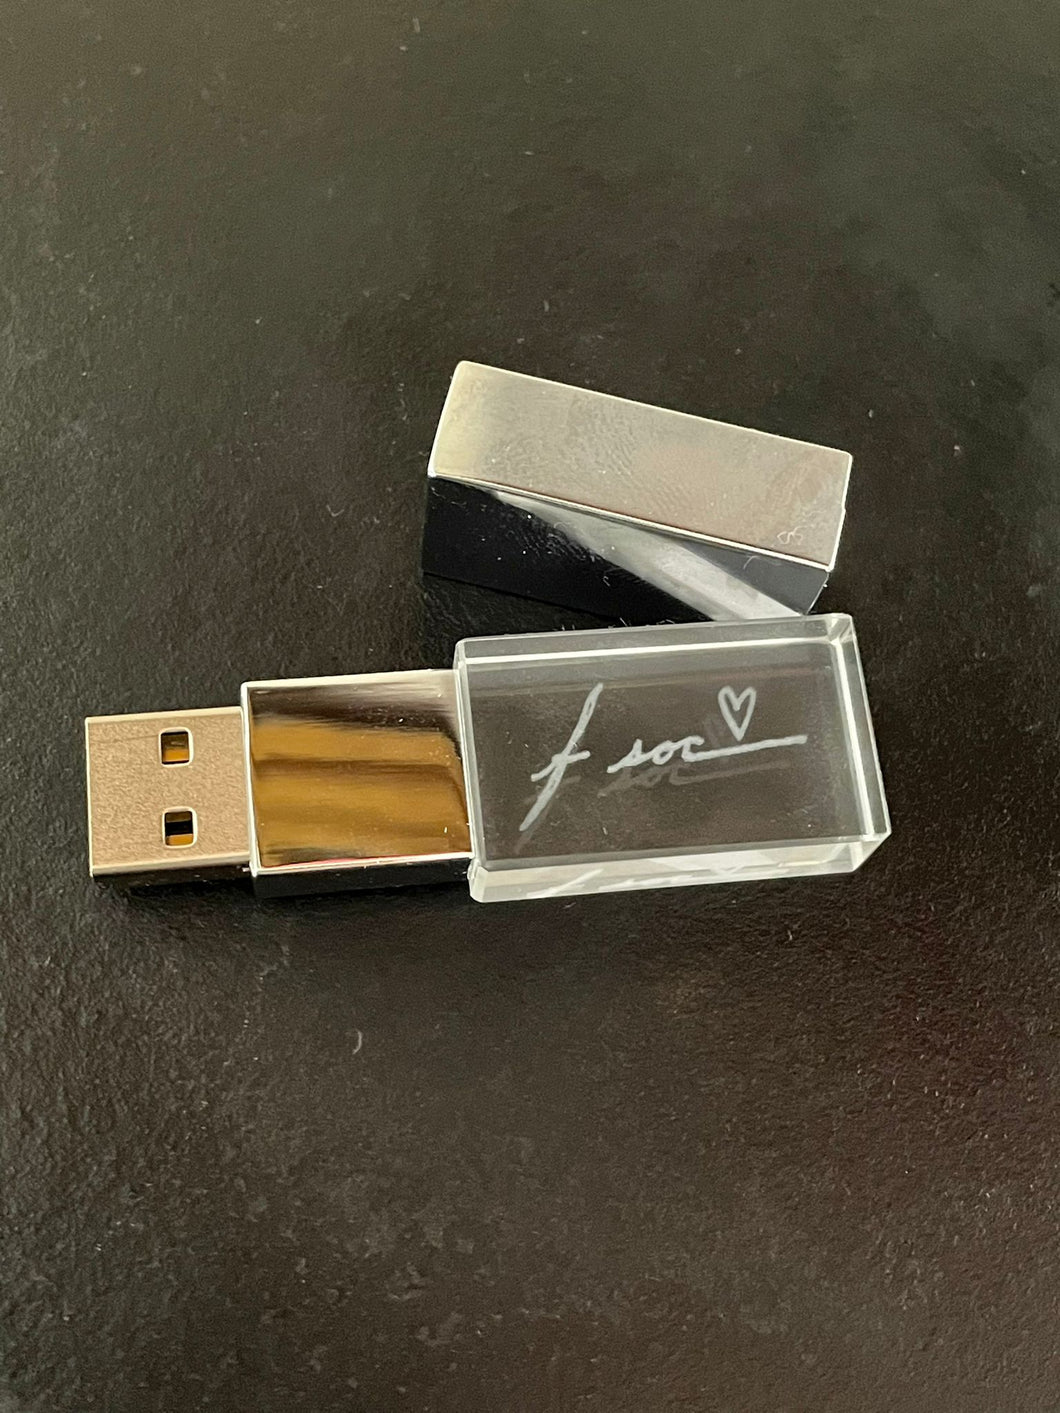 F-Soc 25 year Anniversary USB LP Release